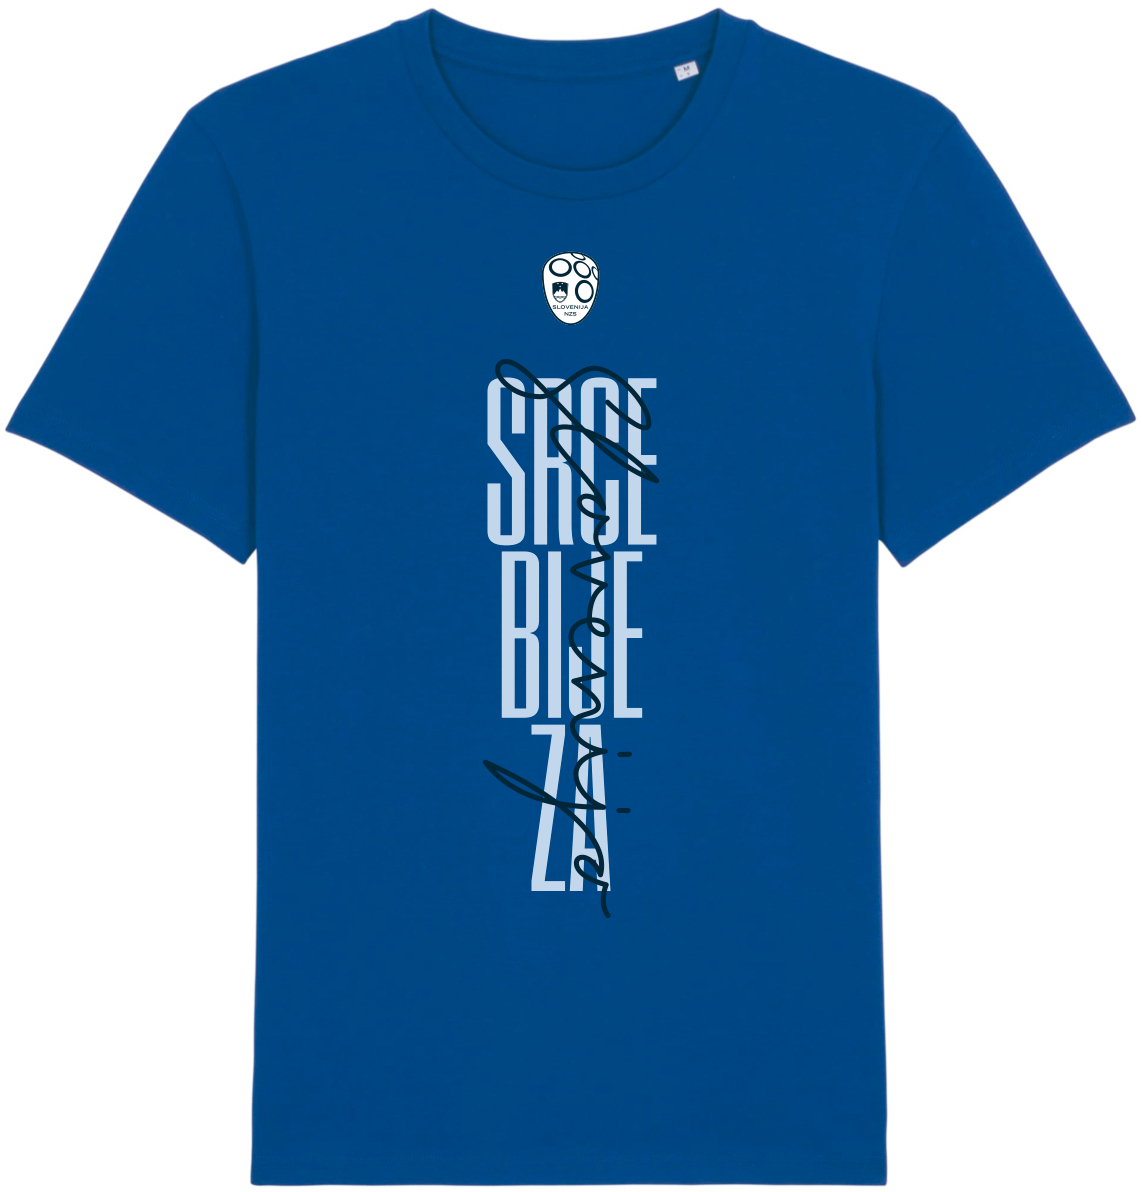 T-shirt odyssey Nike NZSx11TS Slove SRCE BIJE shirt men blue